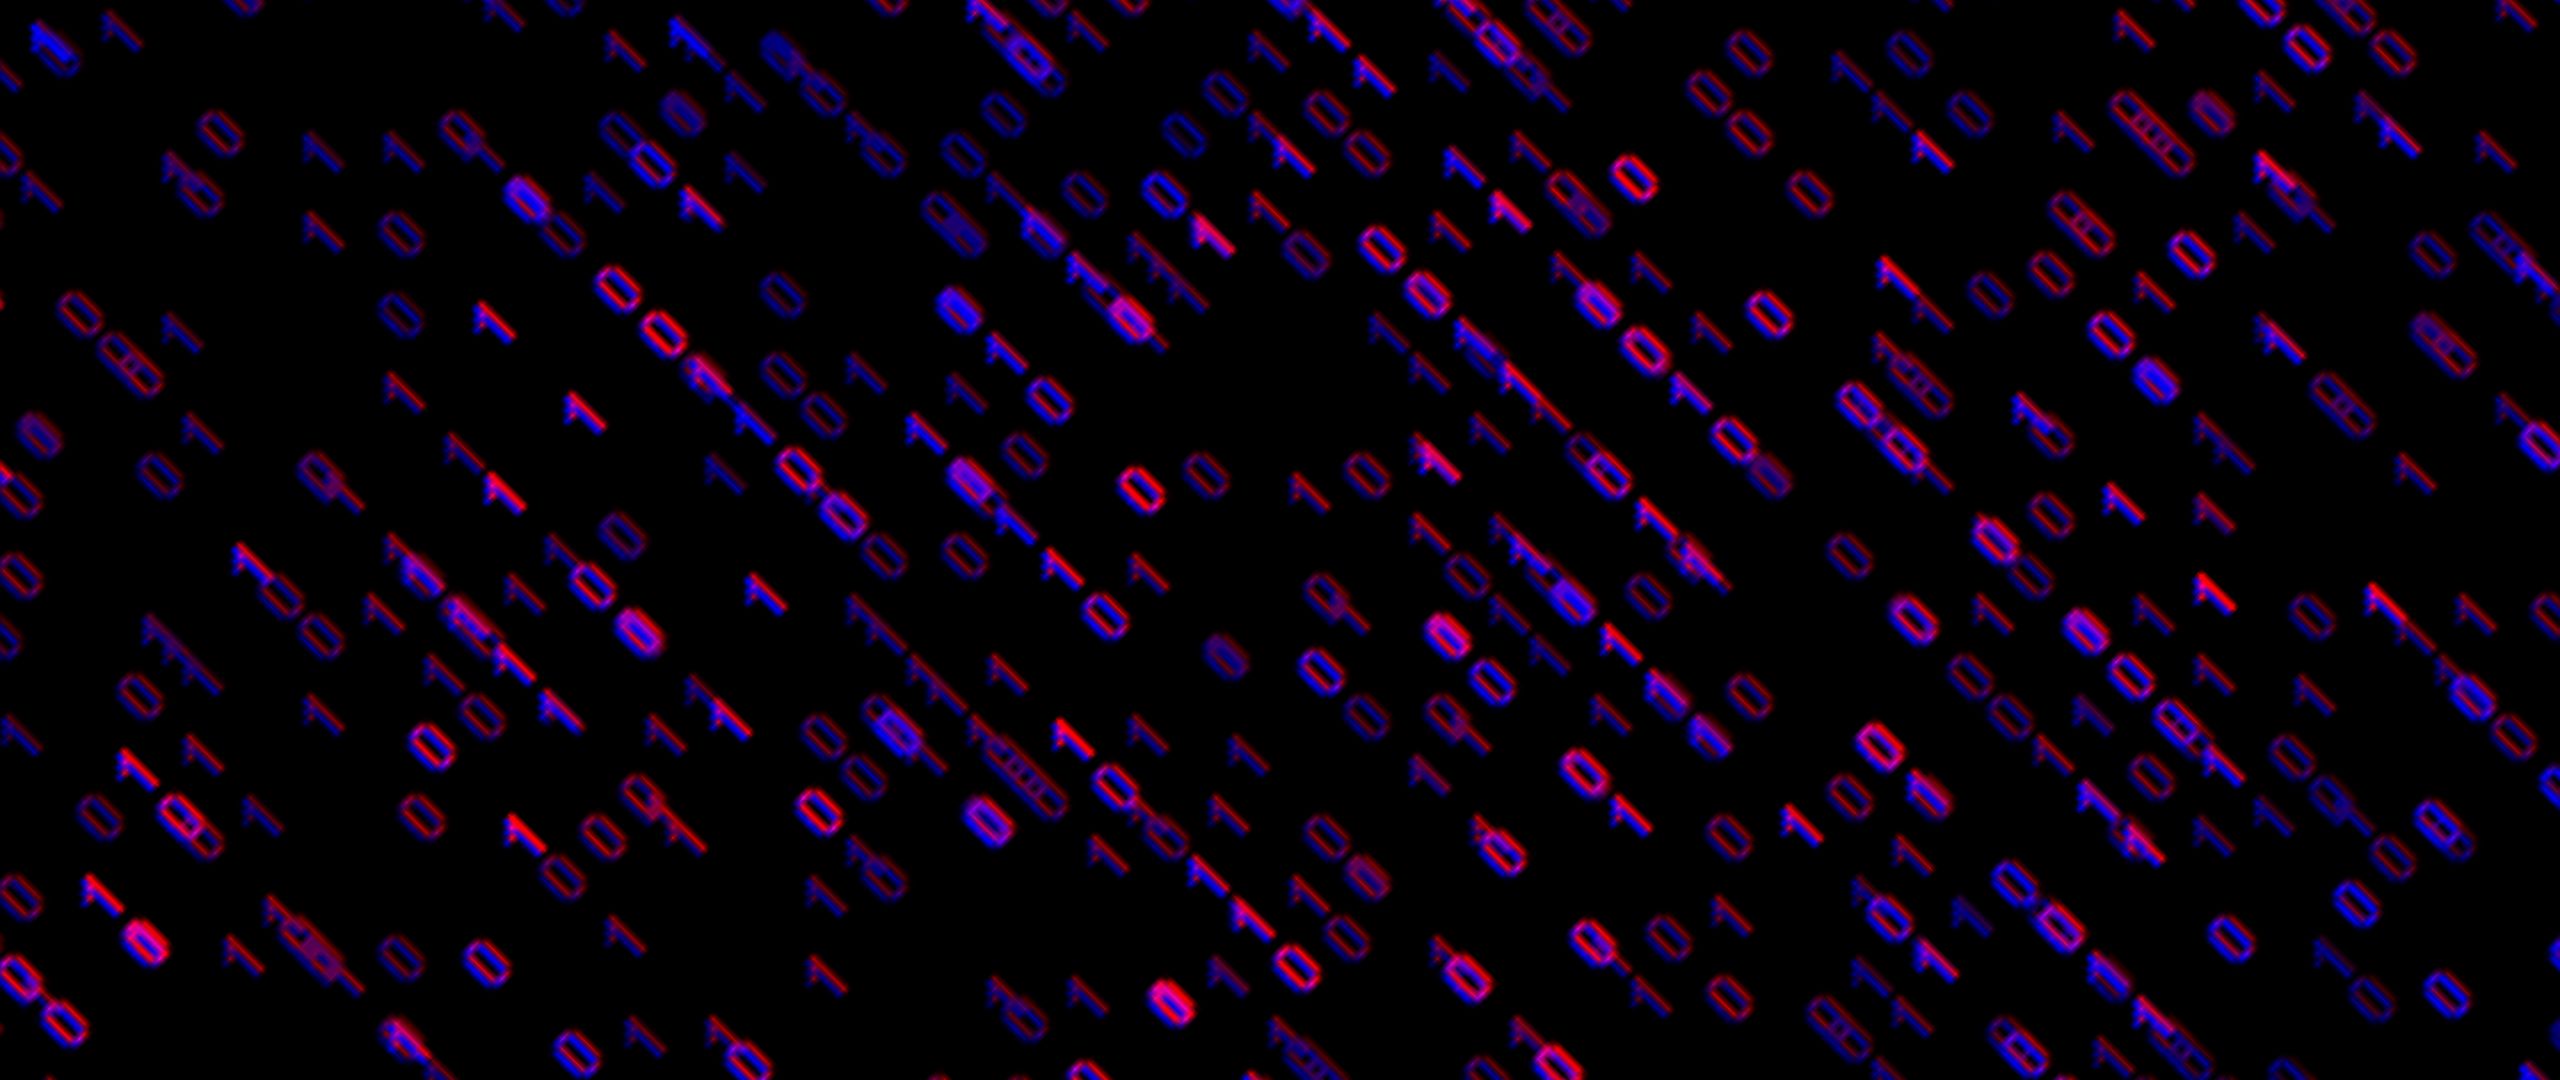 Download wallpaper 2560x1080 code, binary code, glow, pattern dual wide  1080p hd background